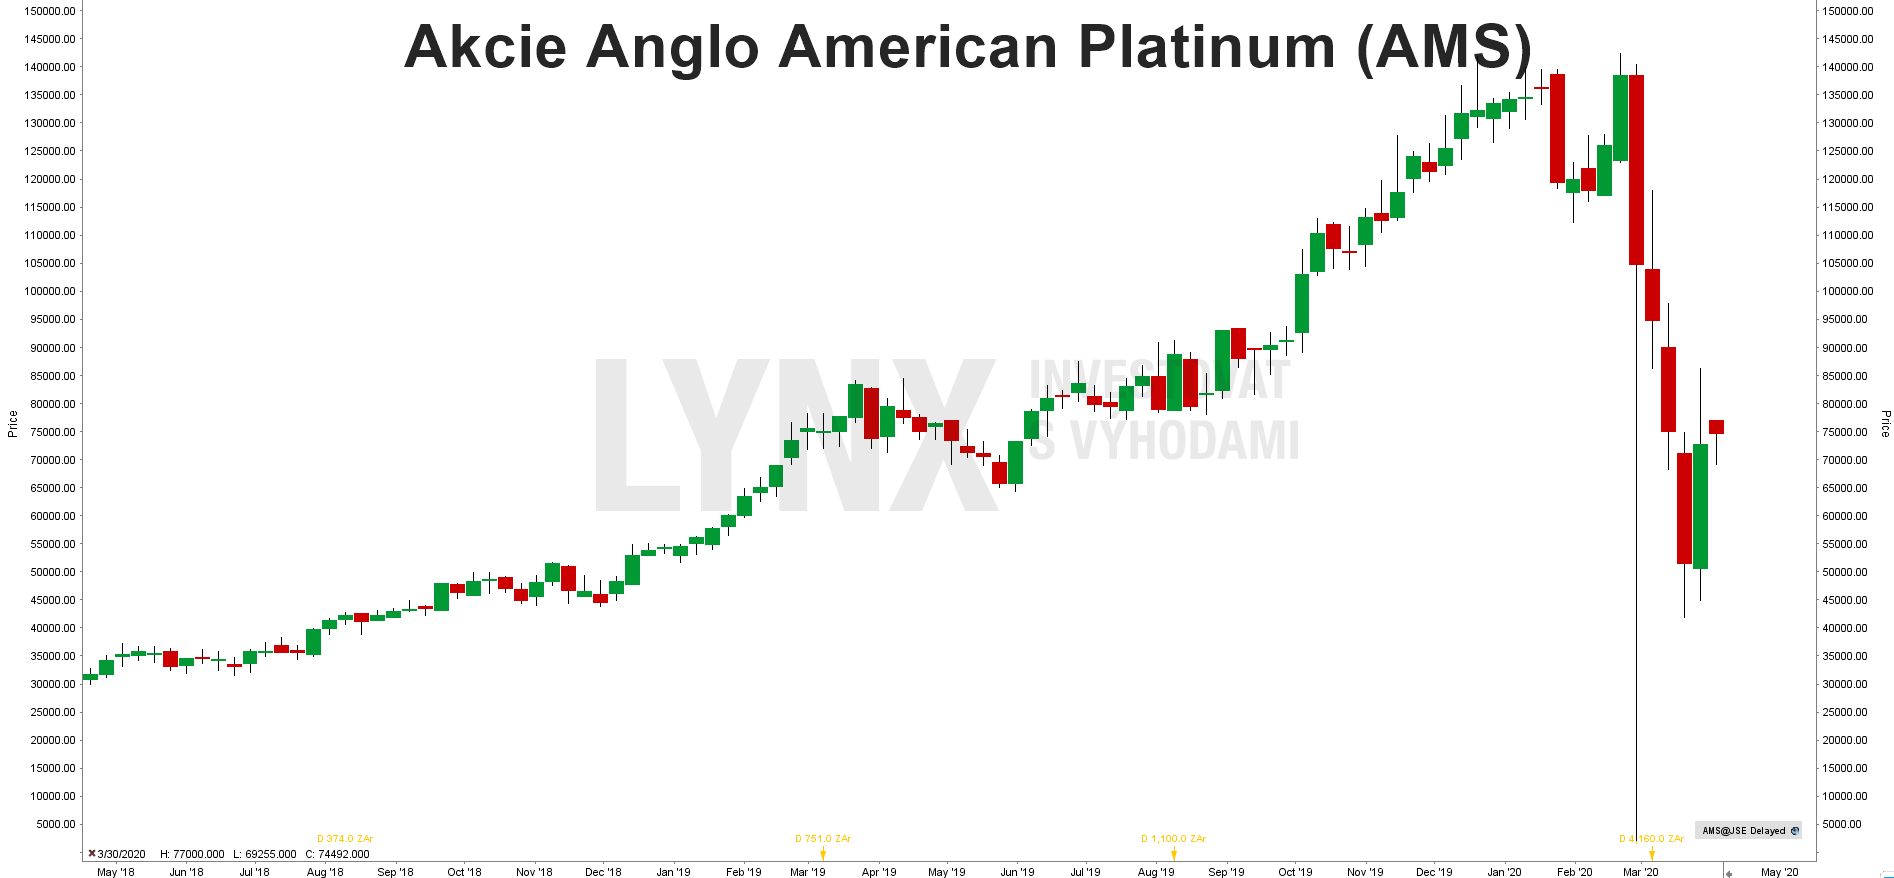 Graf akcie Anglo American Platinum (AMS)